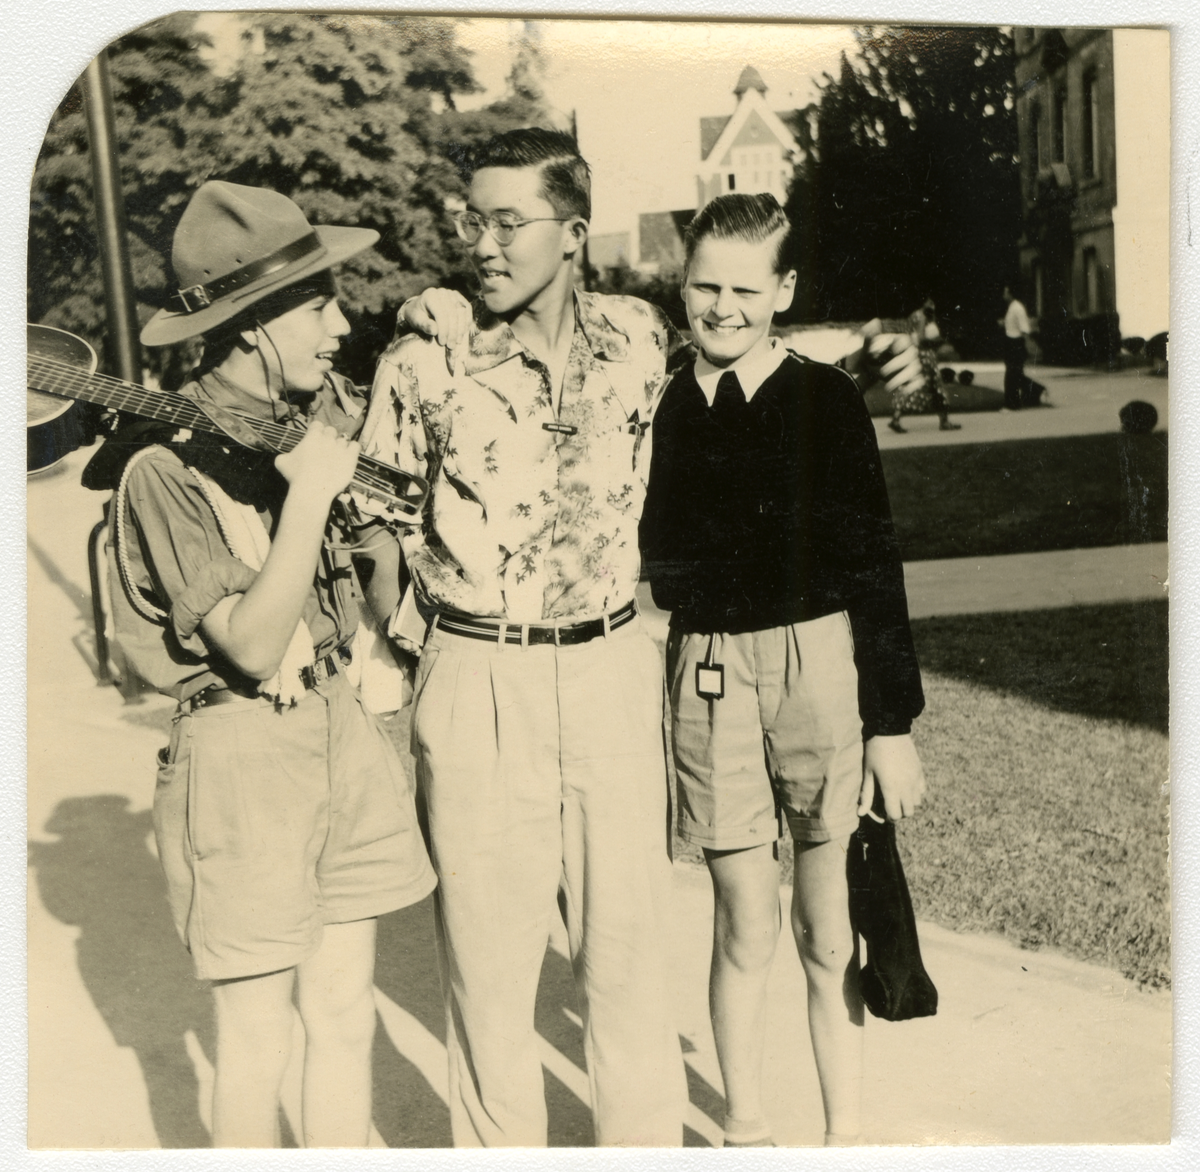 Foto av forfatter Tor Åge Bringsværd på KFUMs (kristelig forening unge menn) hundreårsjubileum i Paris 1955

Tor Åge til venstre, sammen med Jim fra Hawaii og Rolf fra Tyskland